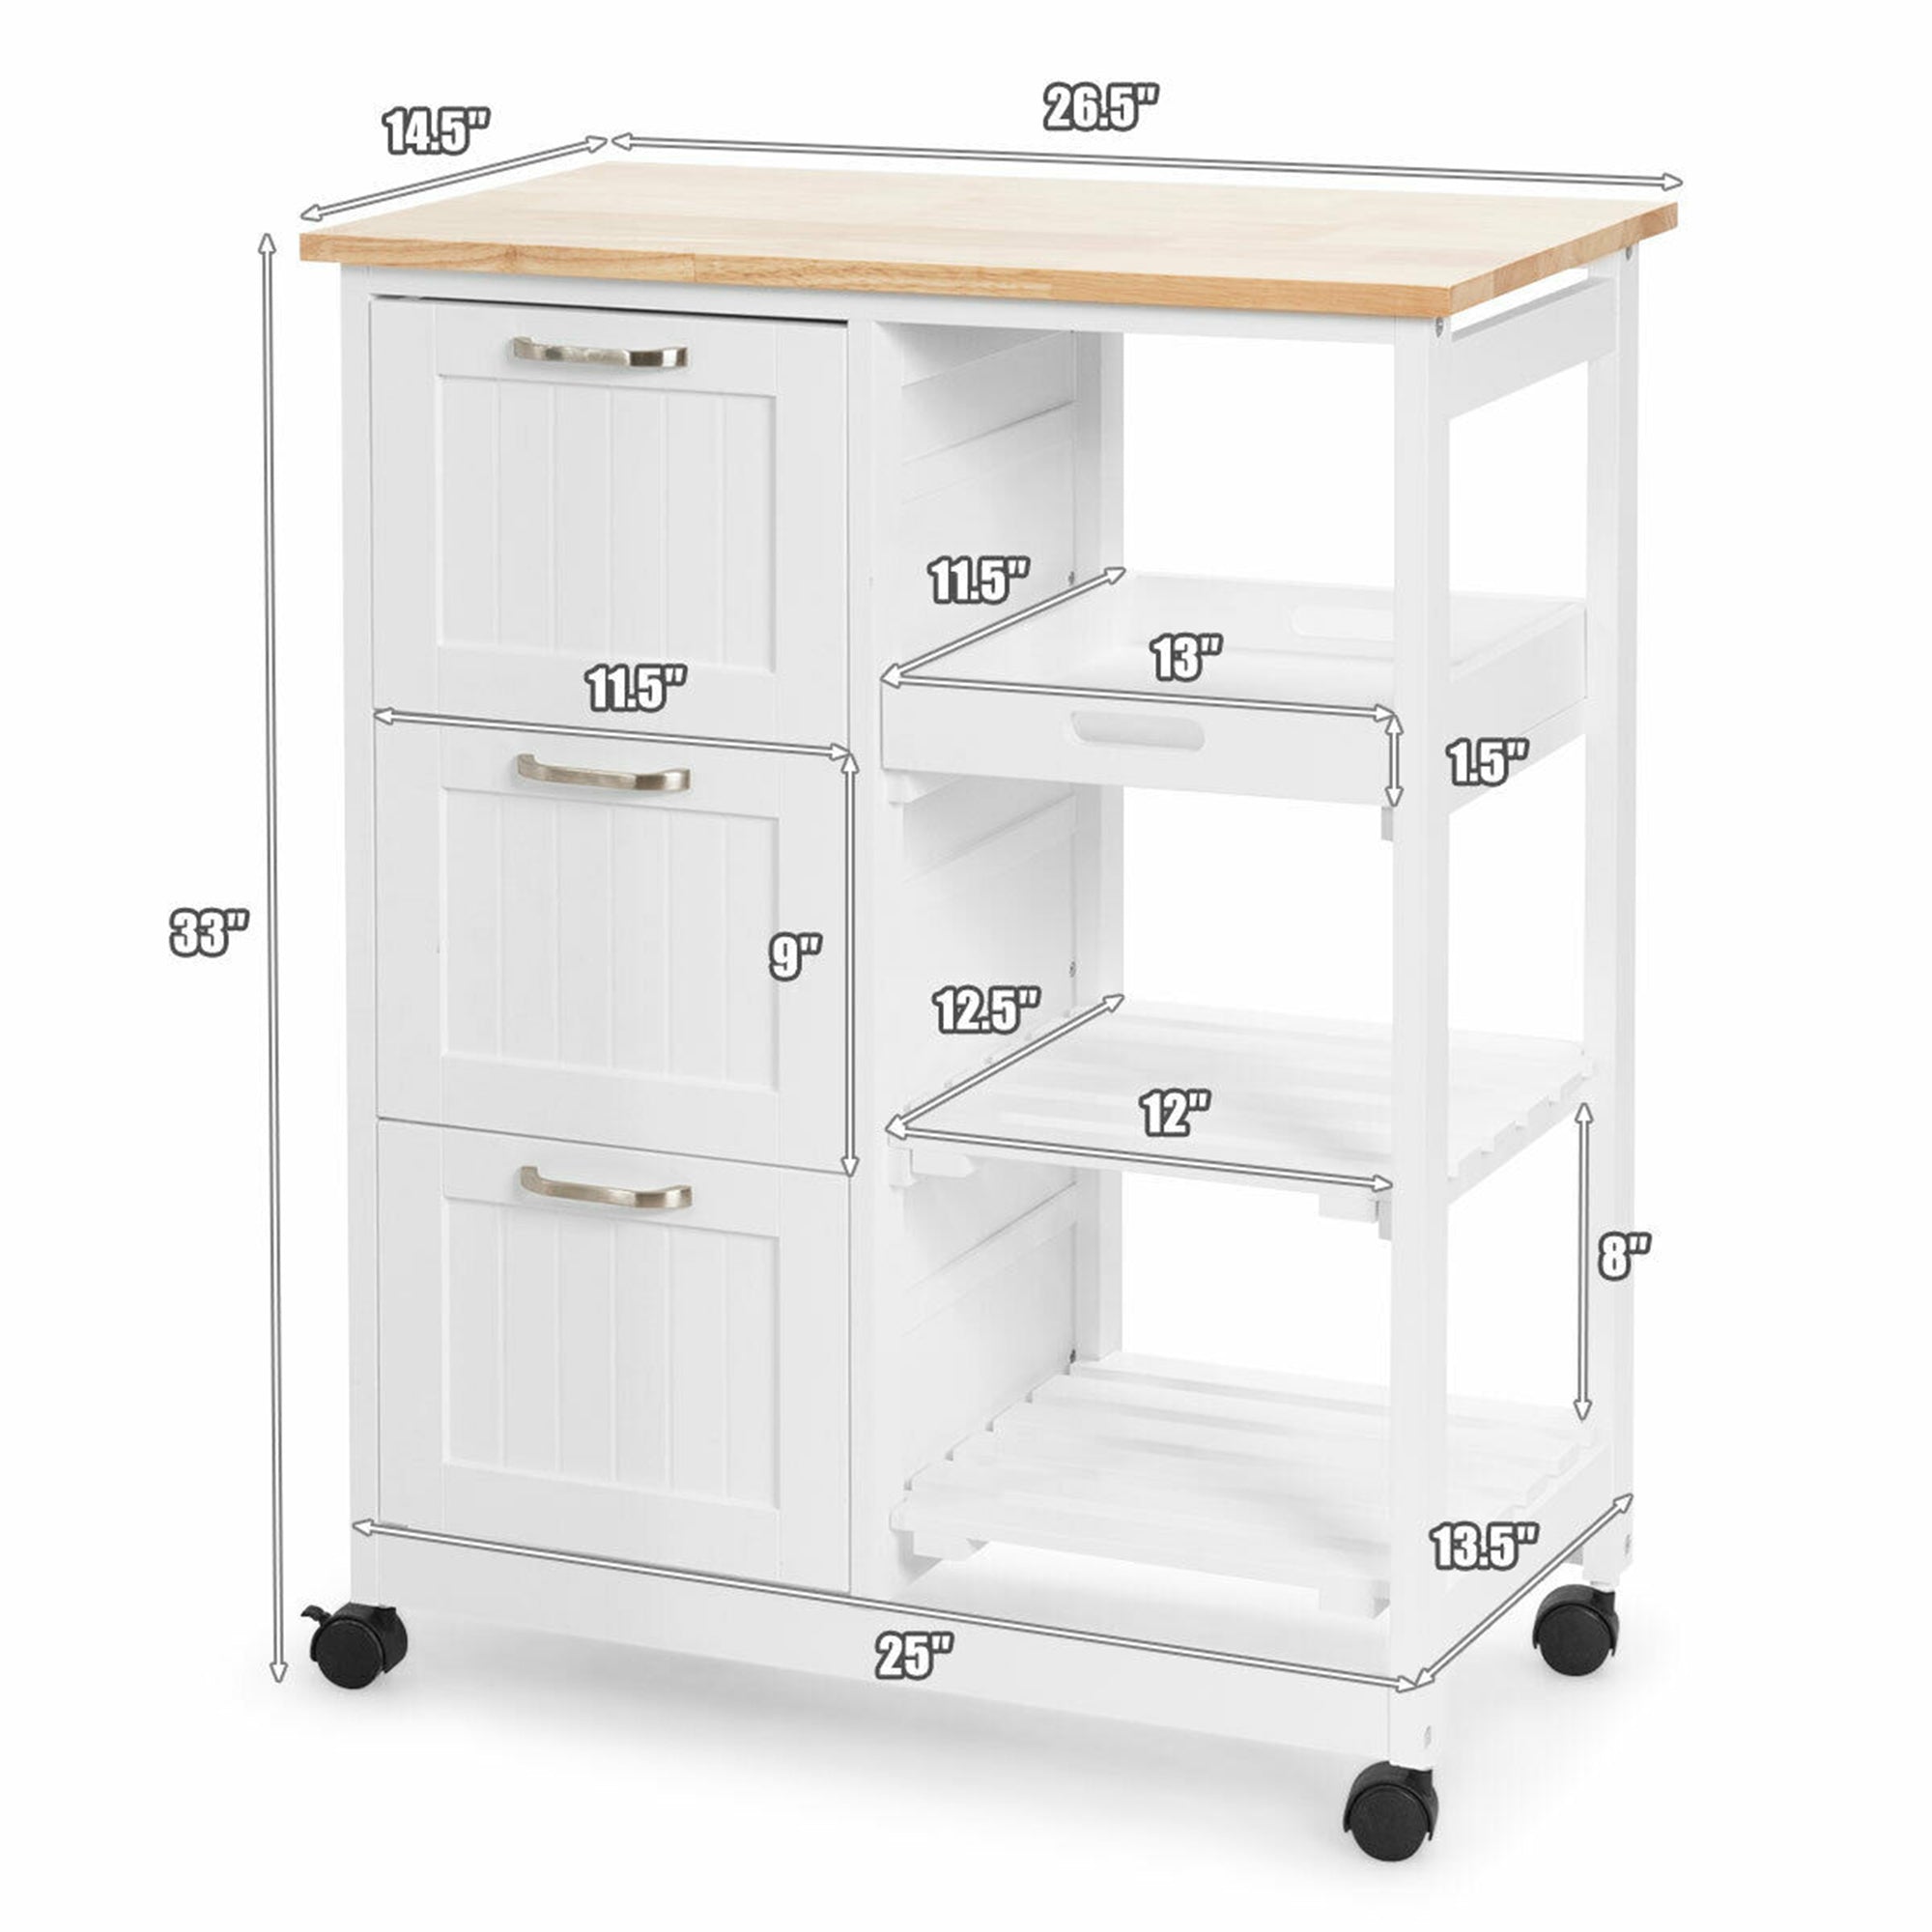 Gymax Rolling Kitchen Island Utility Storage Cart w/ 3 Storage Drawers and Shelves White